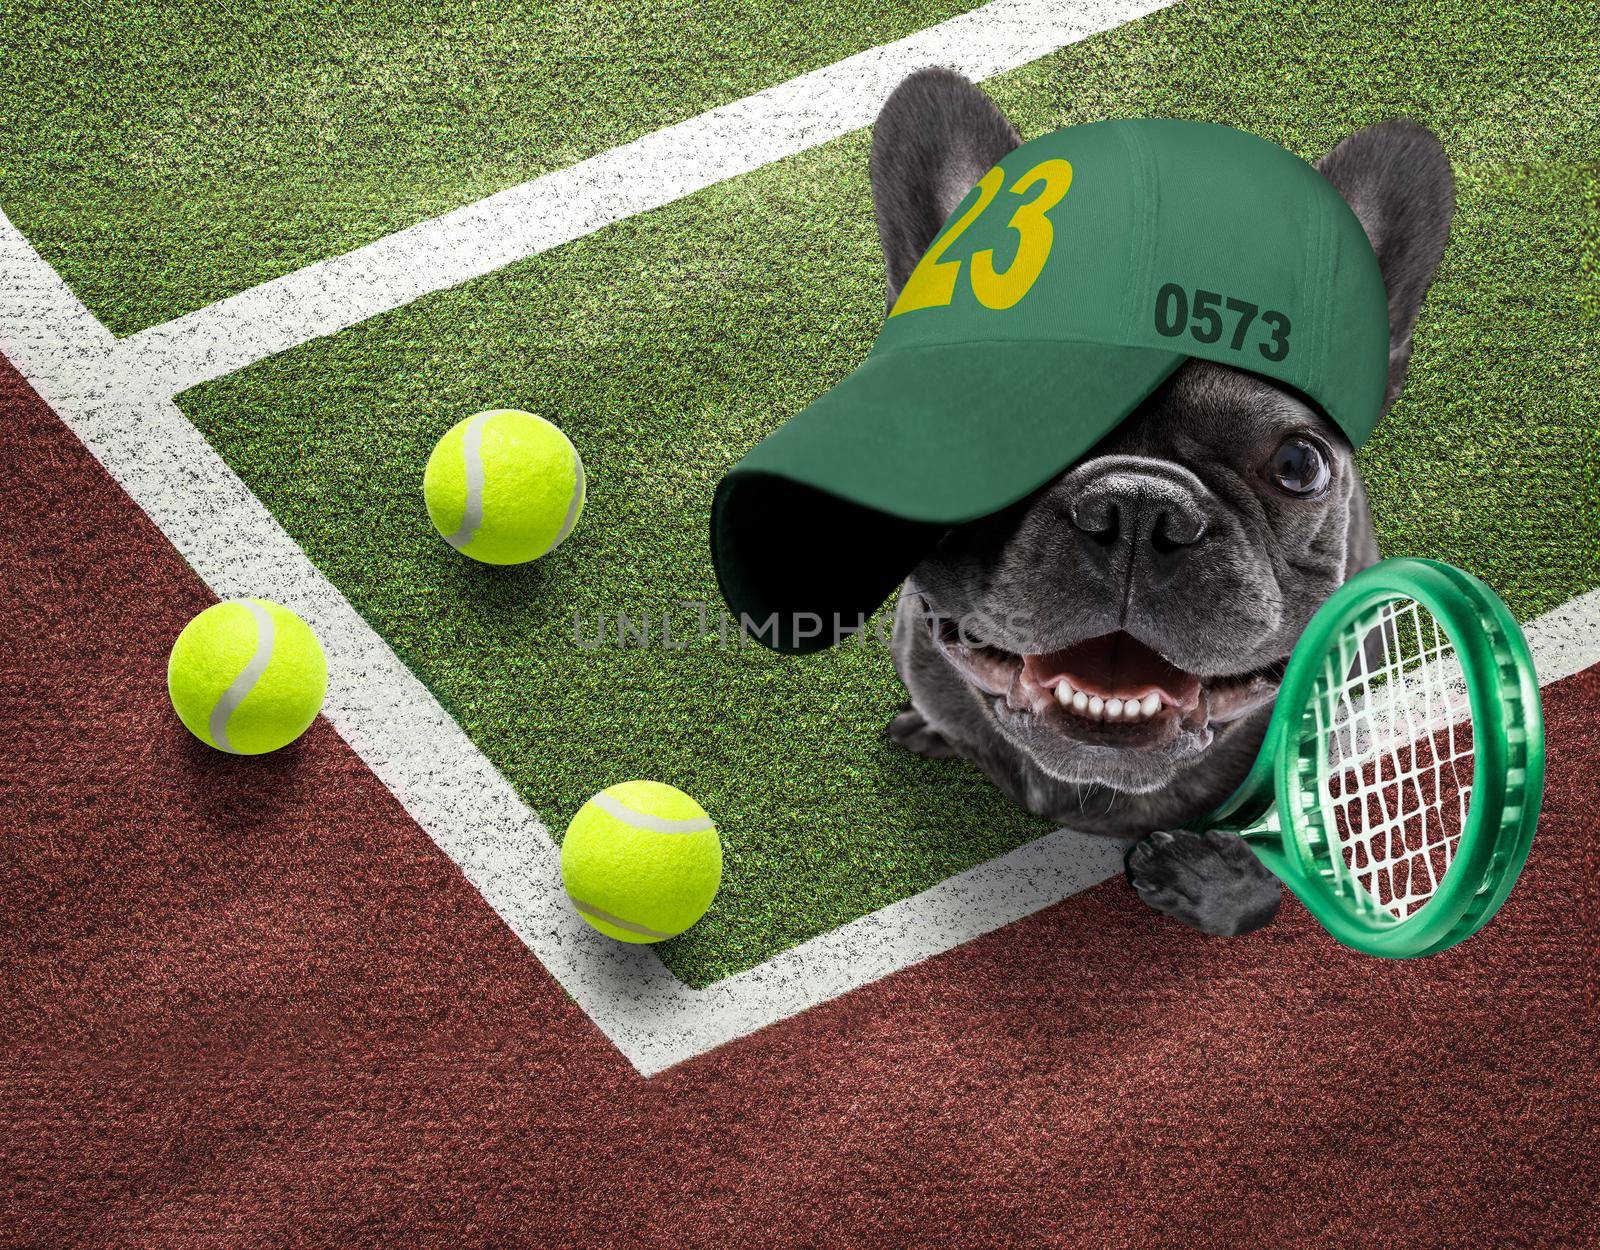 tennis player dog  by Brosch